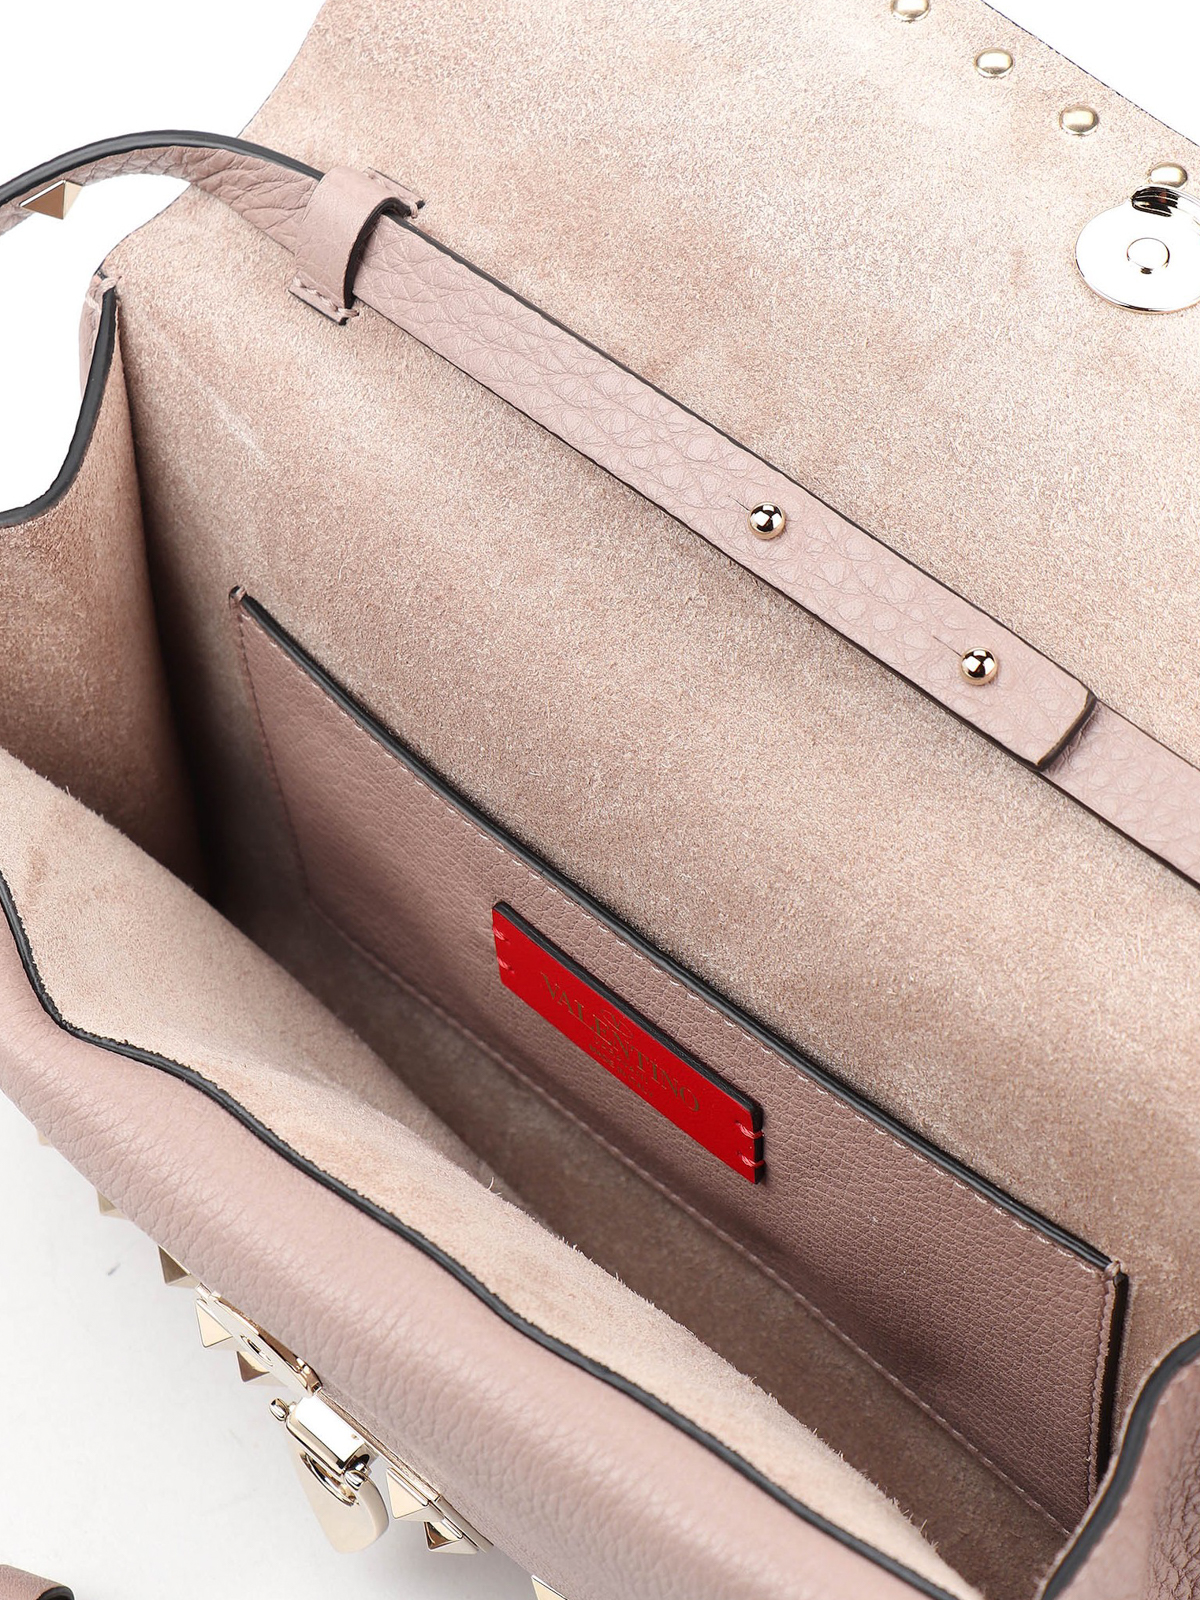 Valentino Garavani Rockstud Bag in Grained Leather with Studs